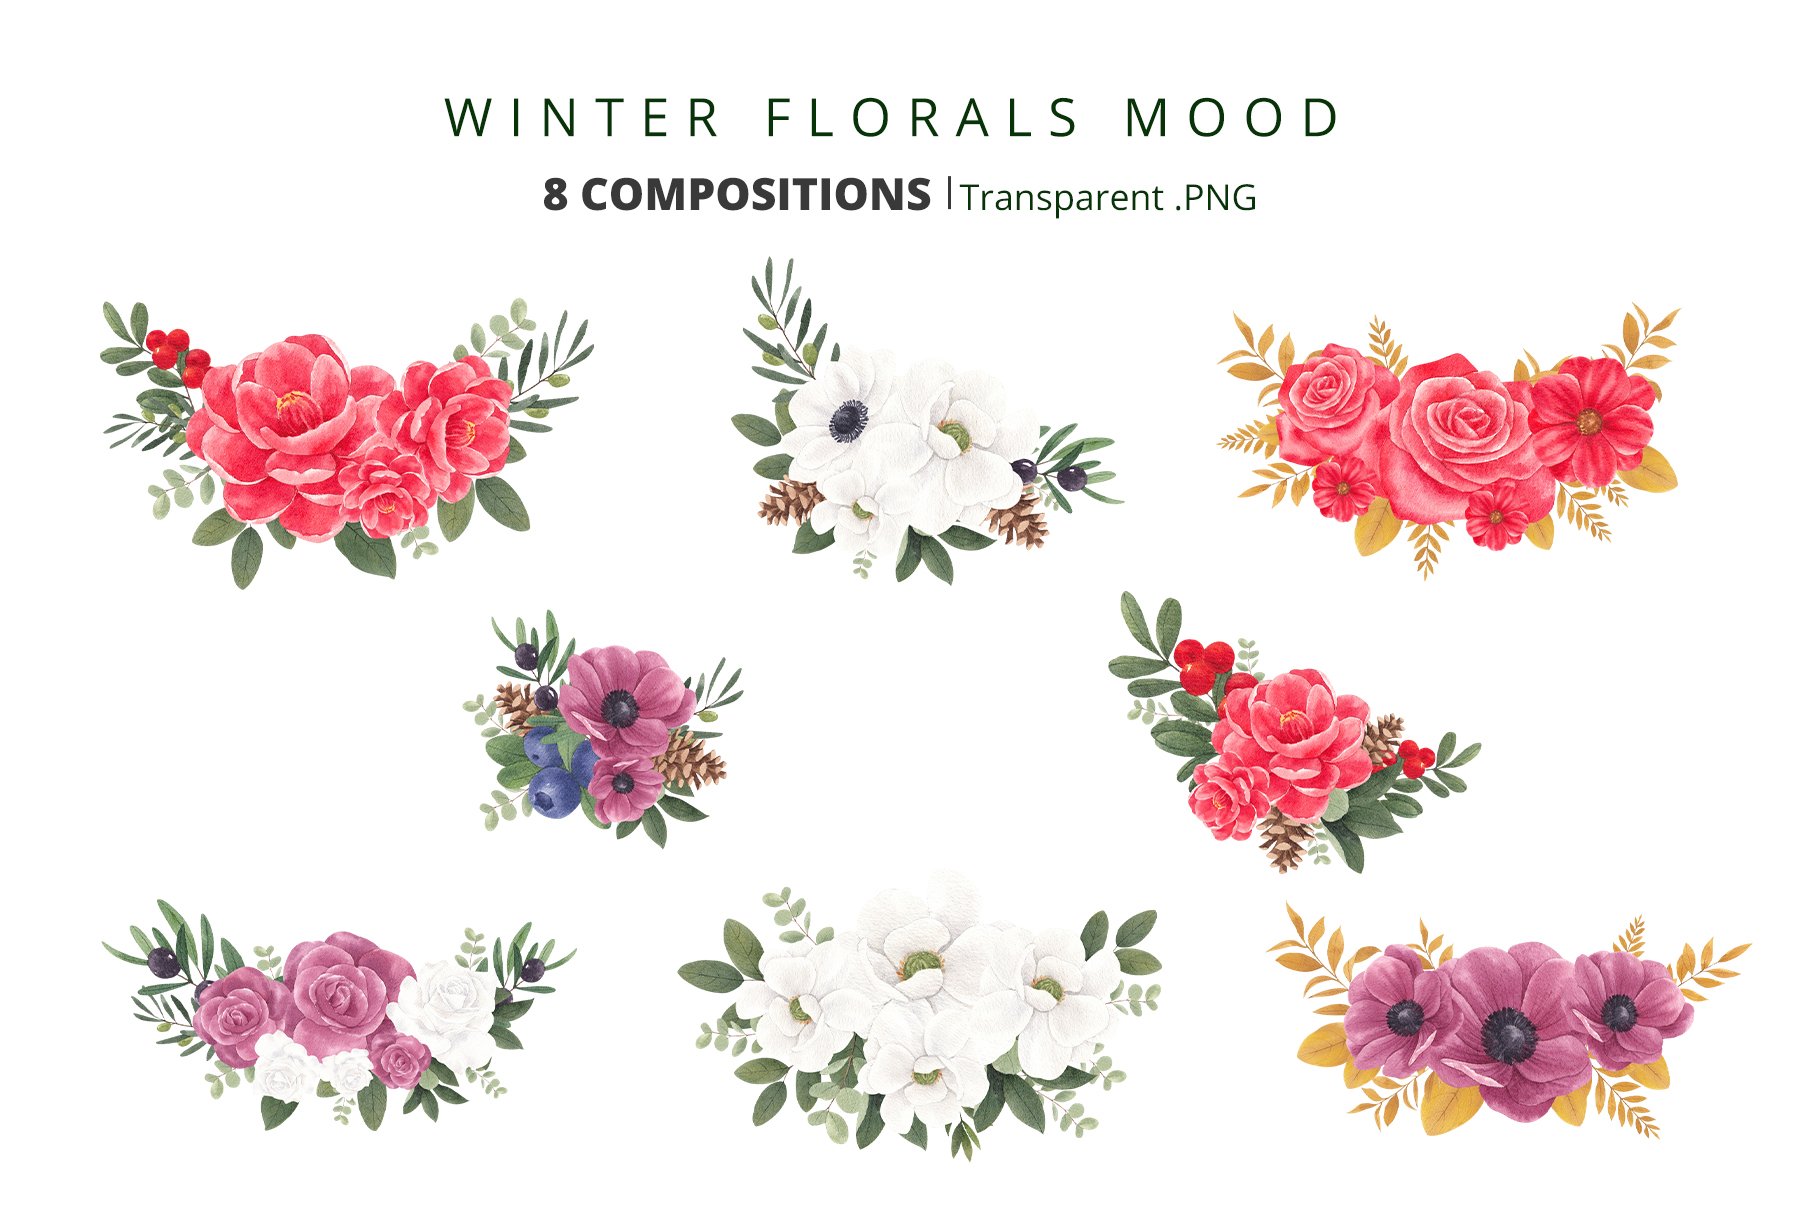 Winter florals mood flowers elements.